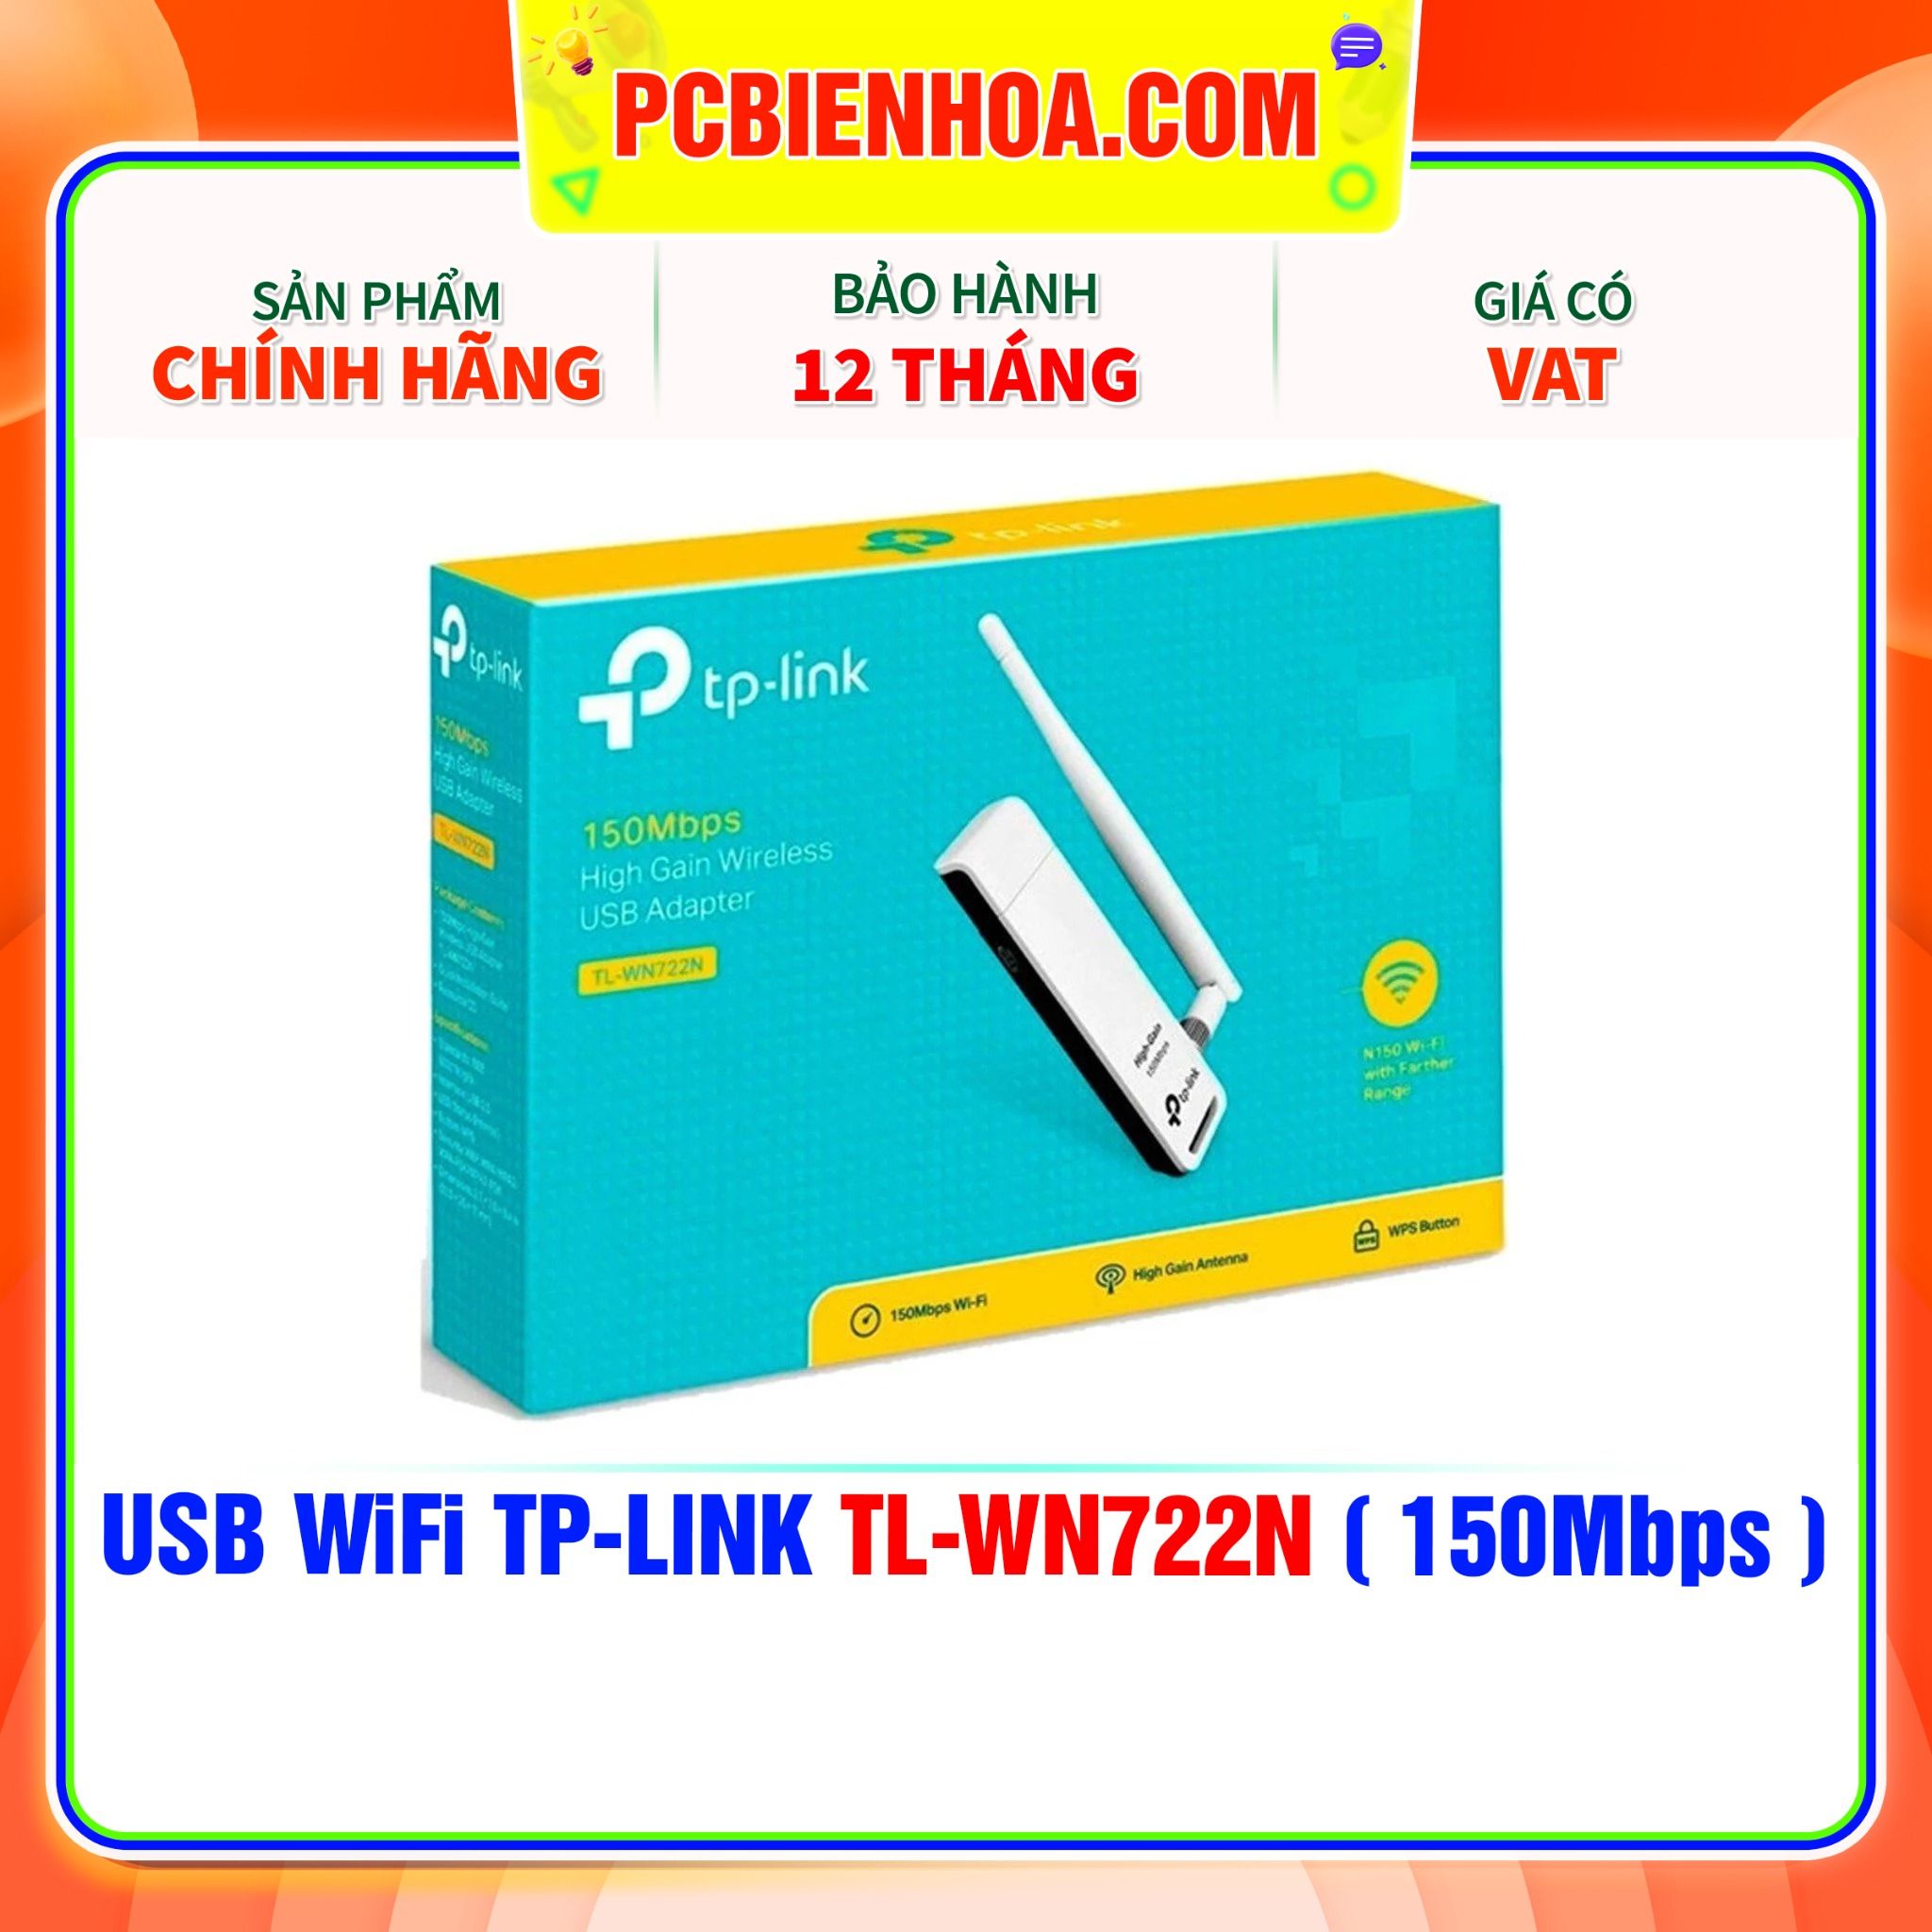  USB WiFi TP-LINK TL-WN722N ( 150Mbps ) 